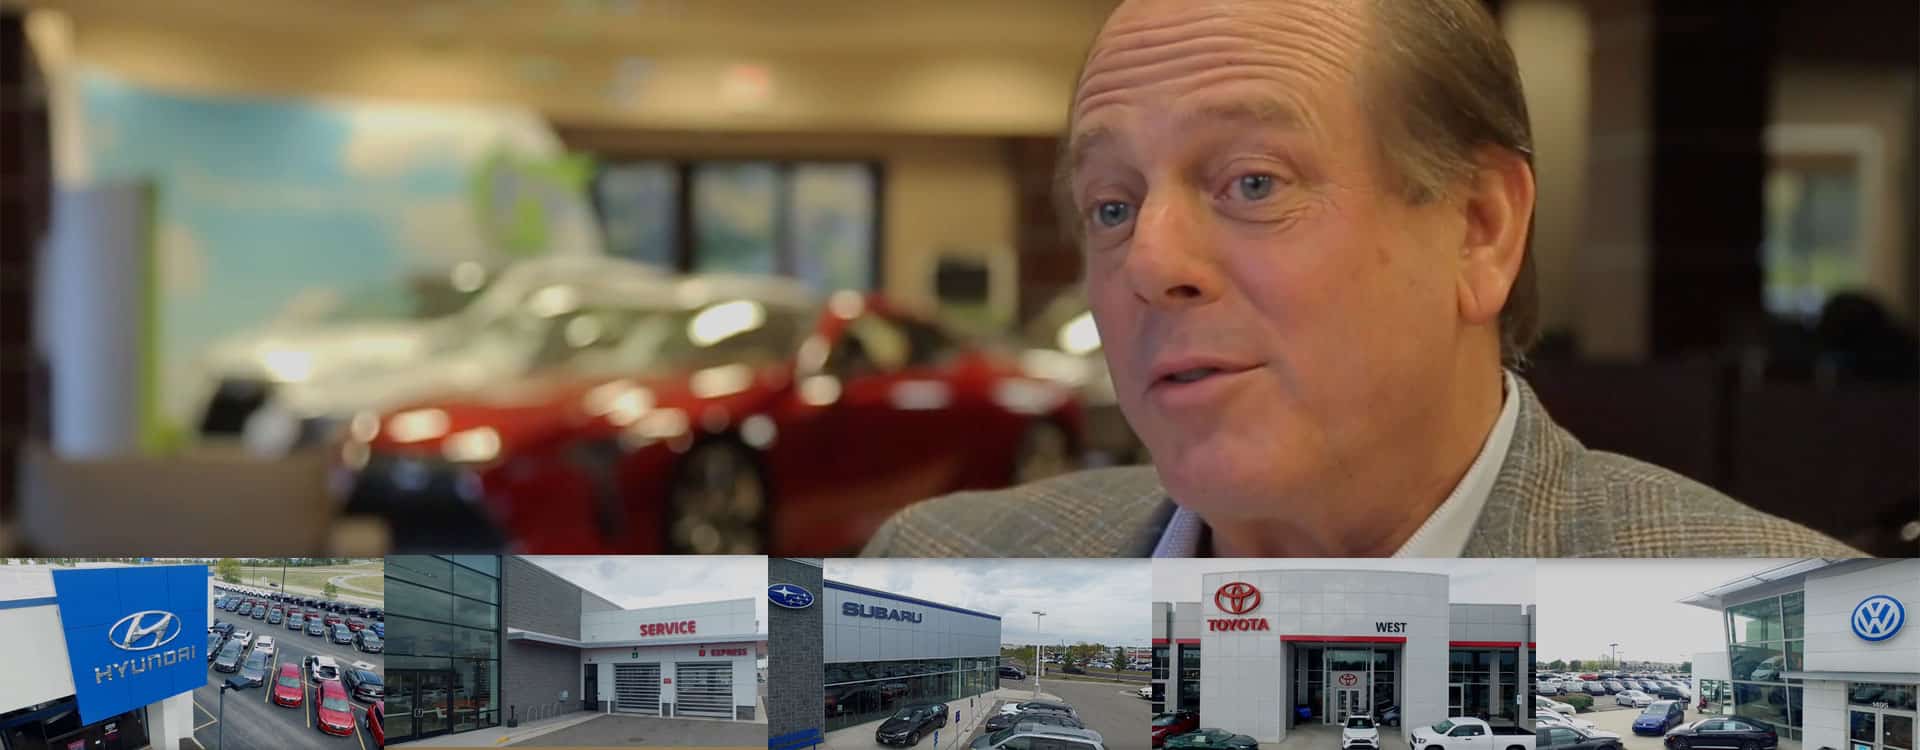 Germain Automotive Partnership Acquires Hatfield Auto Mall from Sonic Automotive Inc.